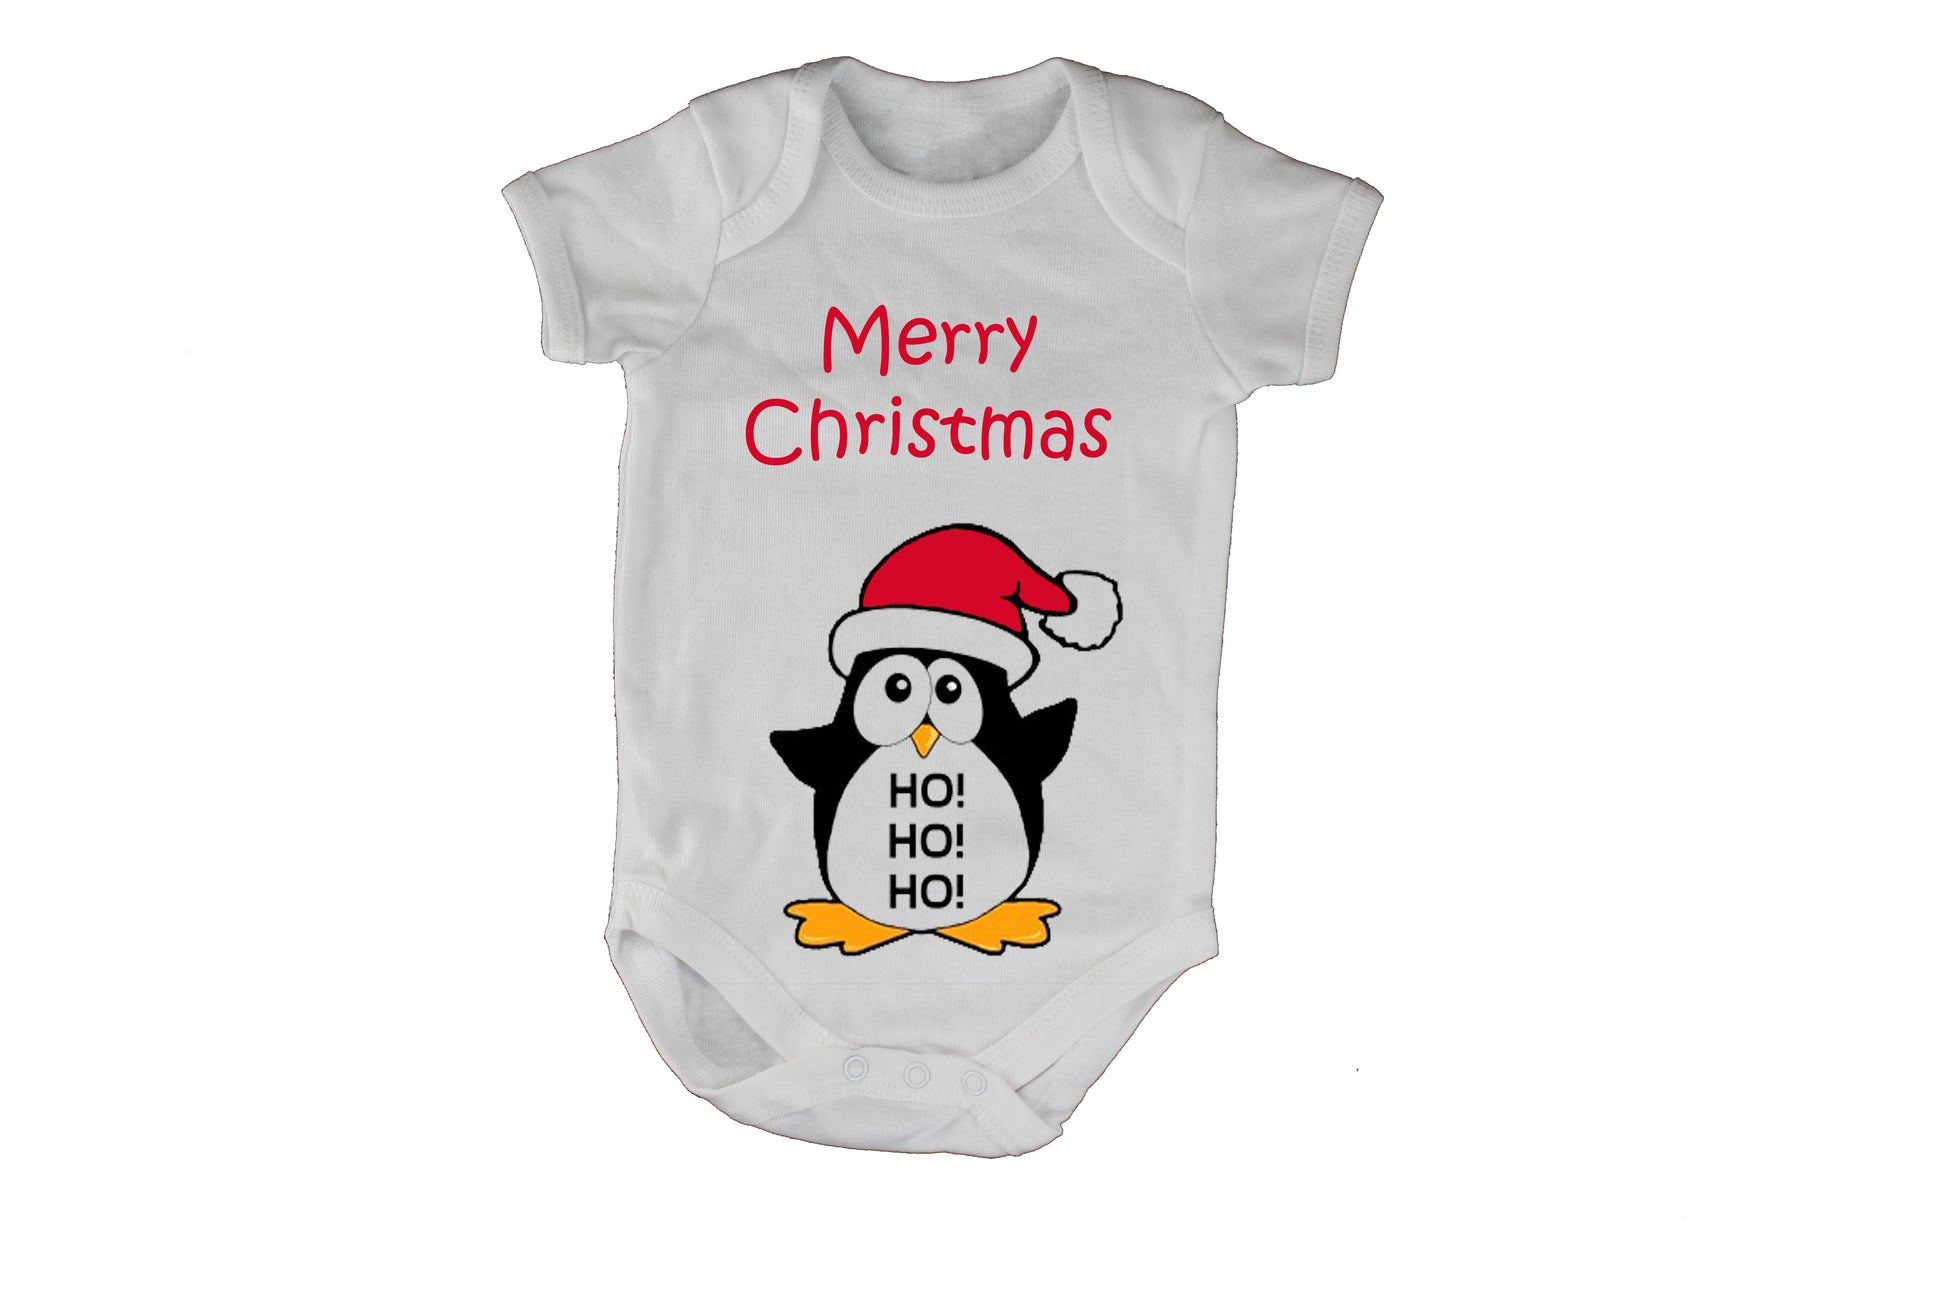 Merry Christmas - Penguin! - BuyAbility South Africa